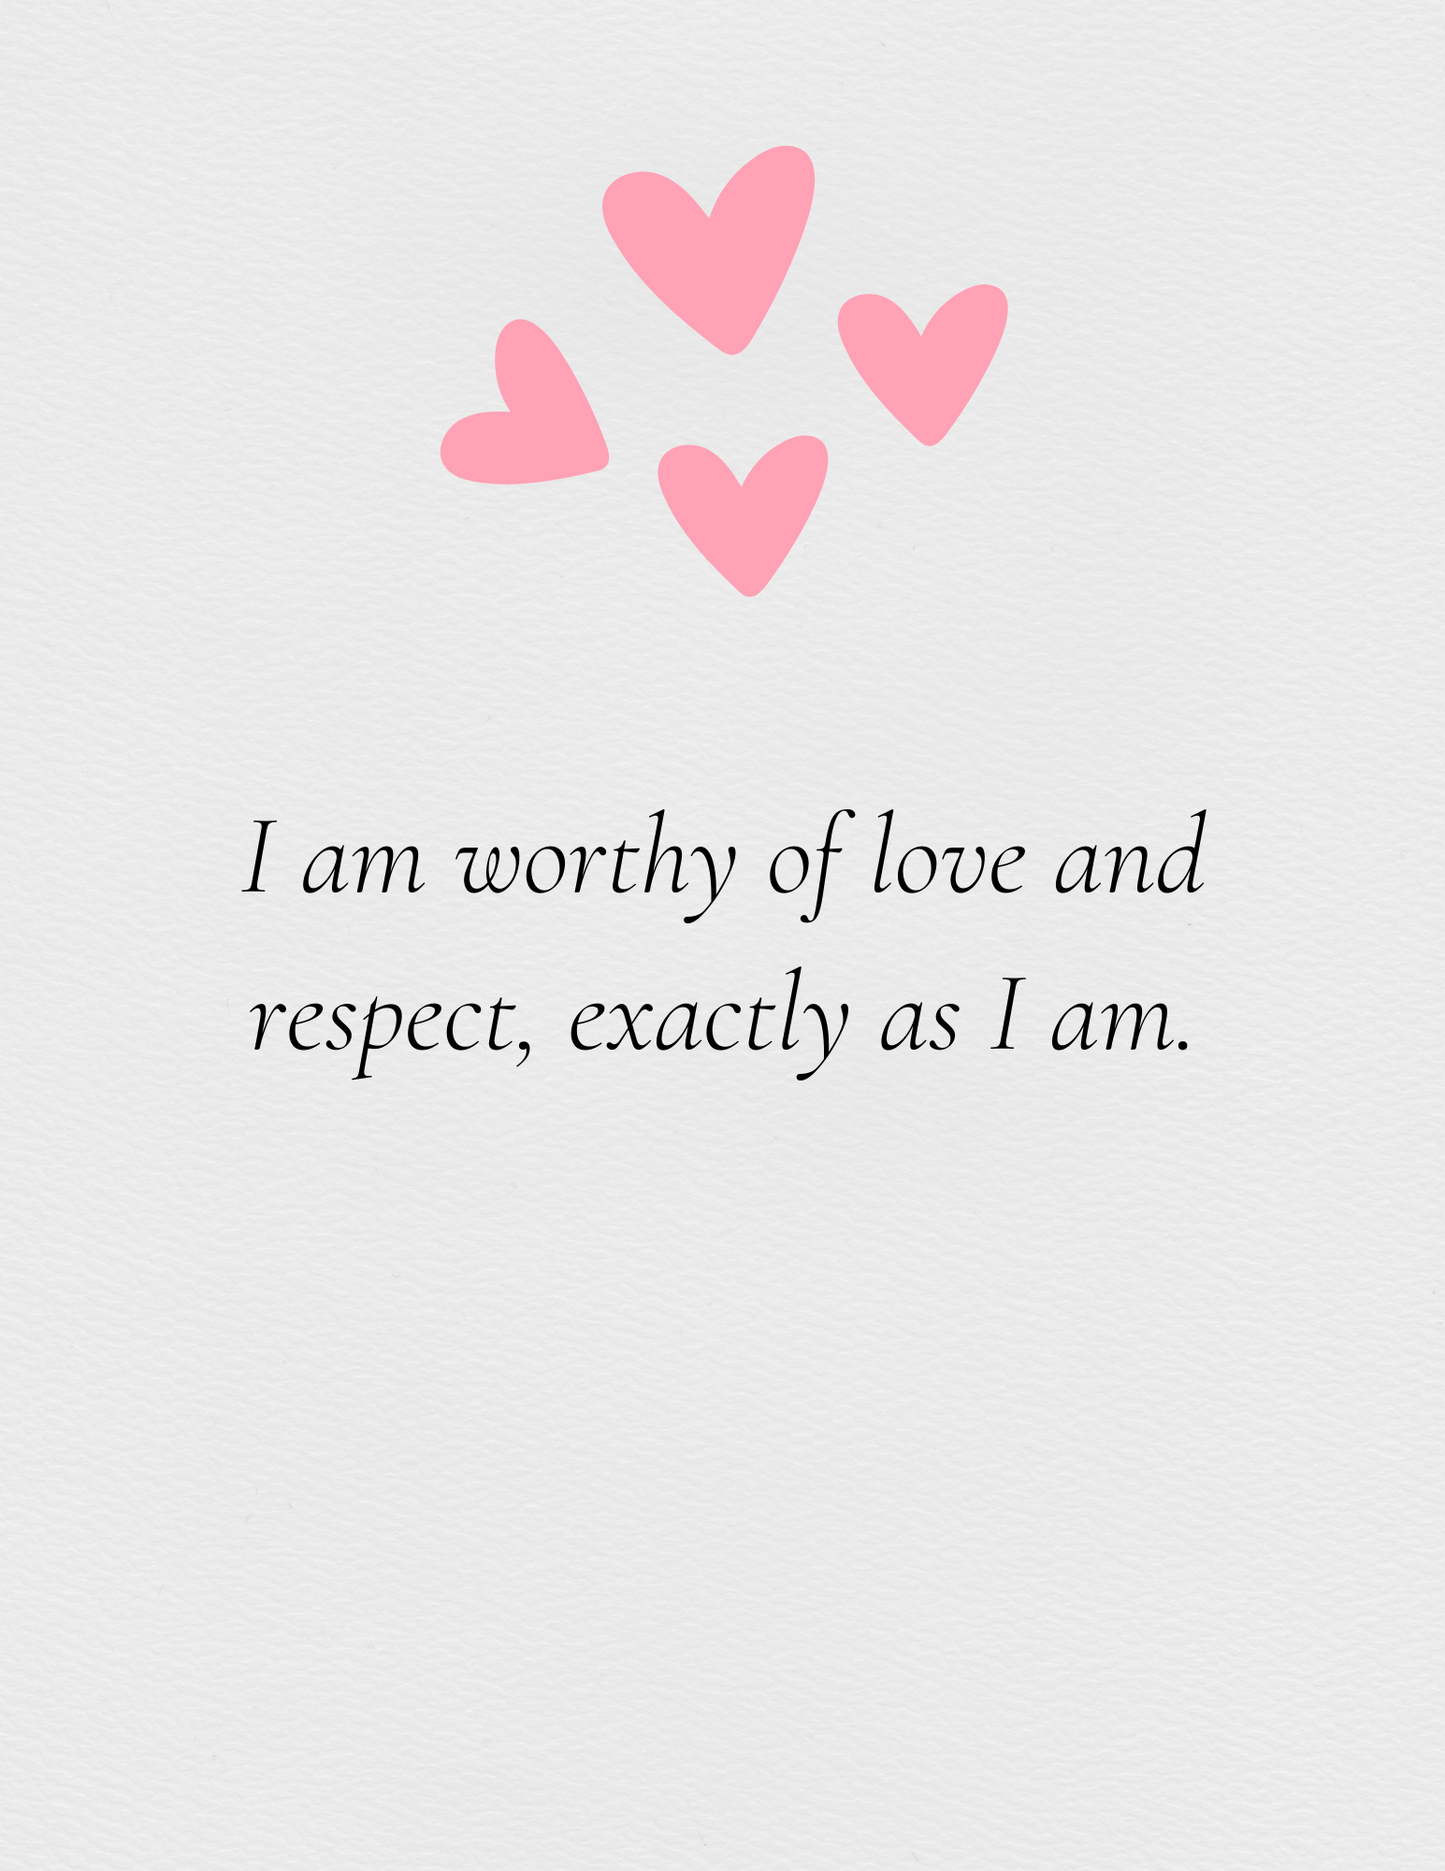 Self Love & Worth: 7 Day Journal (Digital Download)